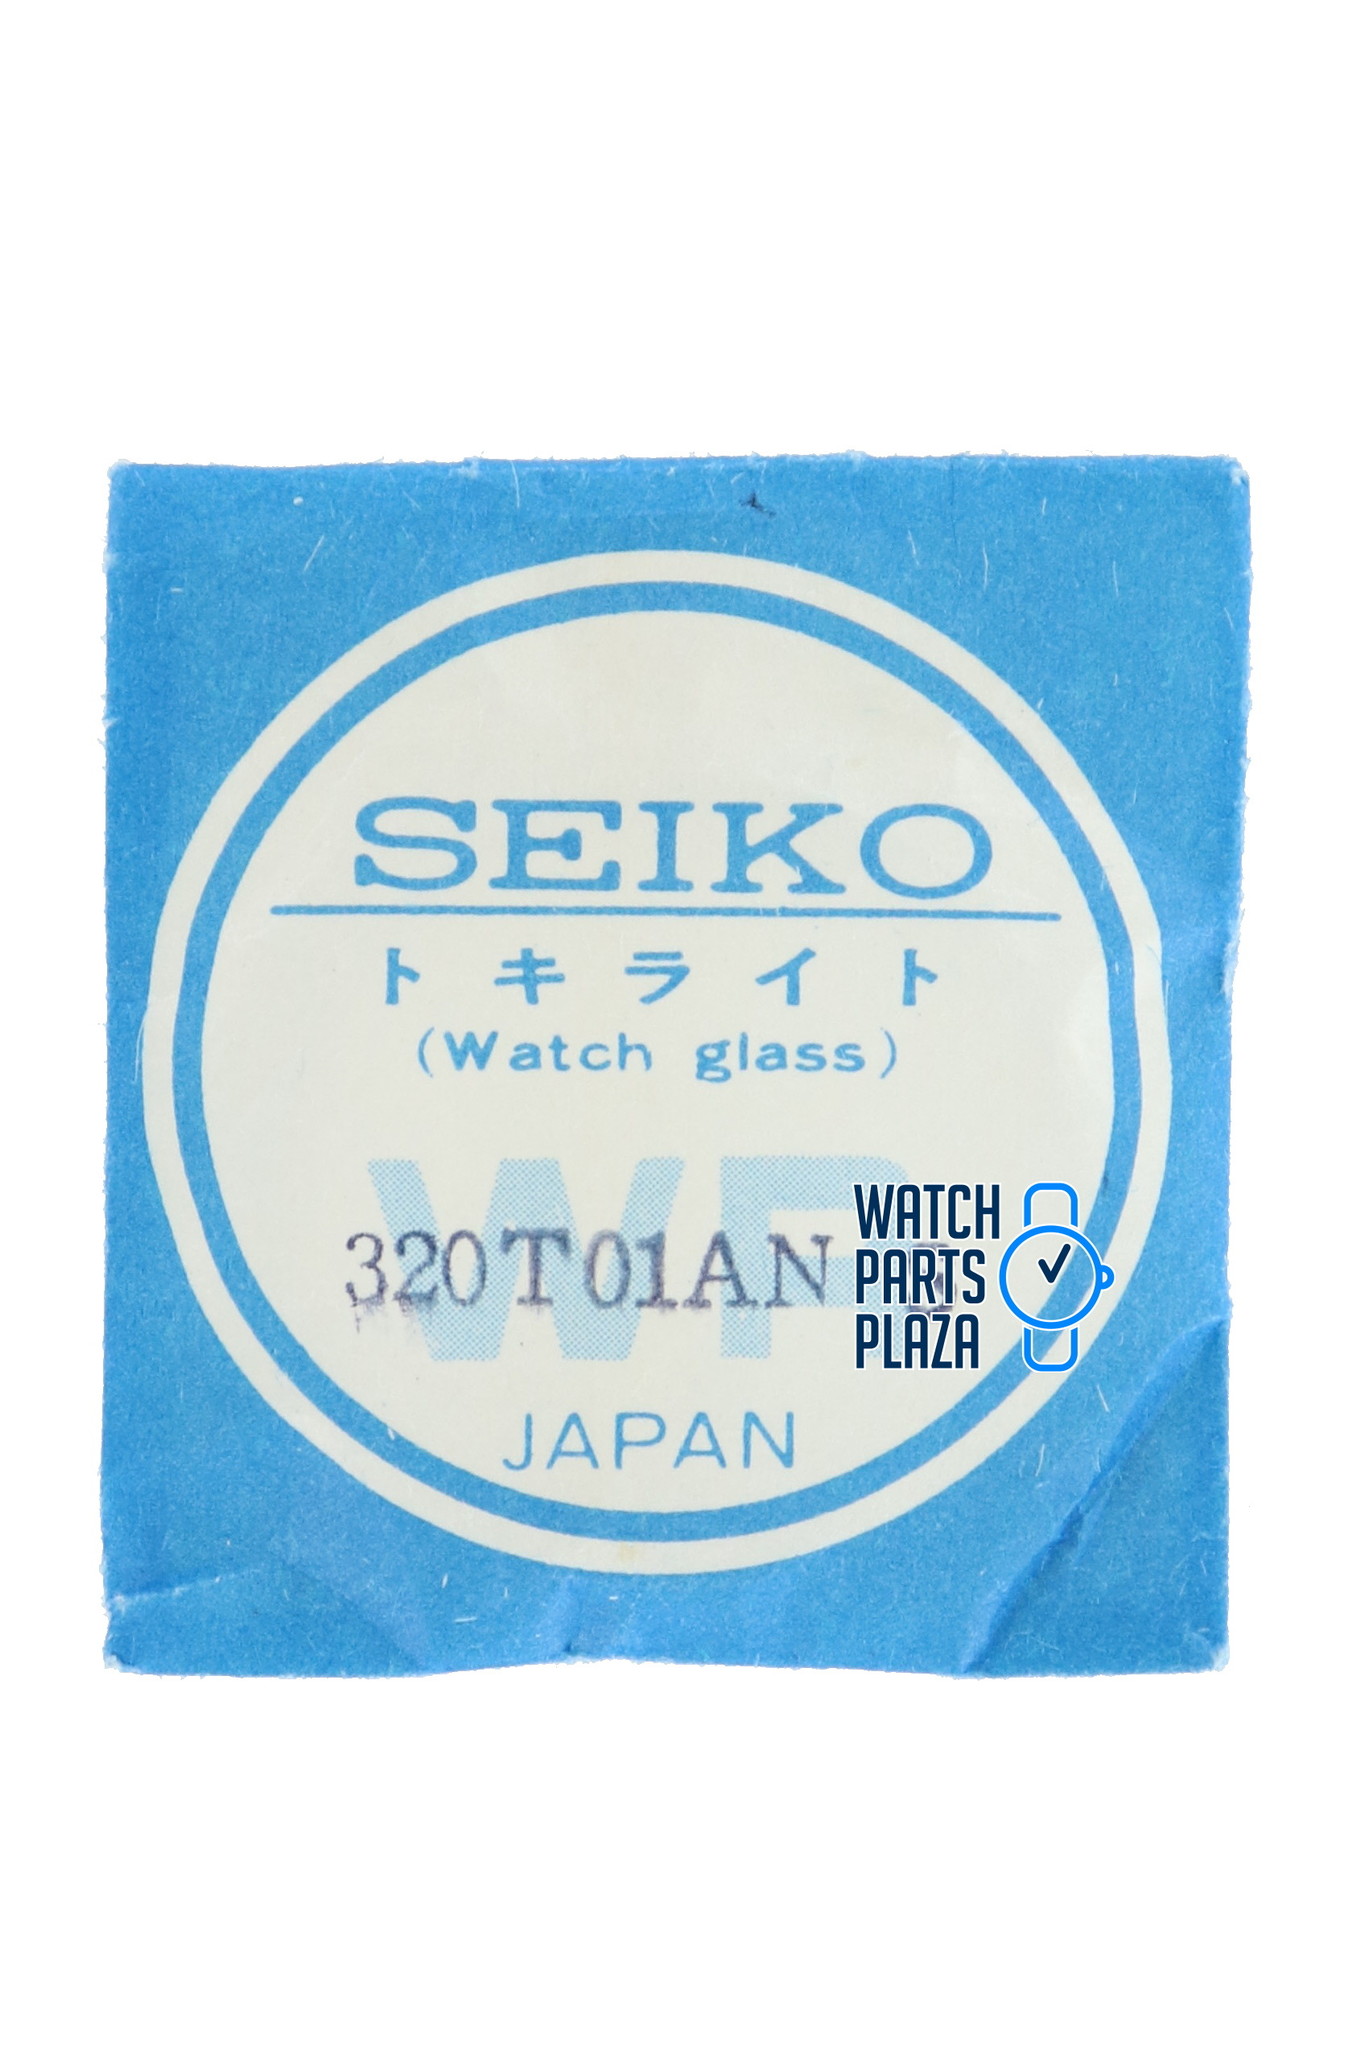 Seiko 320T01ANS0 Crystal Glass 6246-9000 / 9001 - WatchPlaza